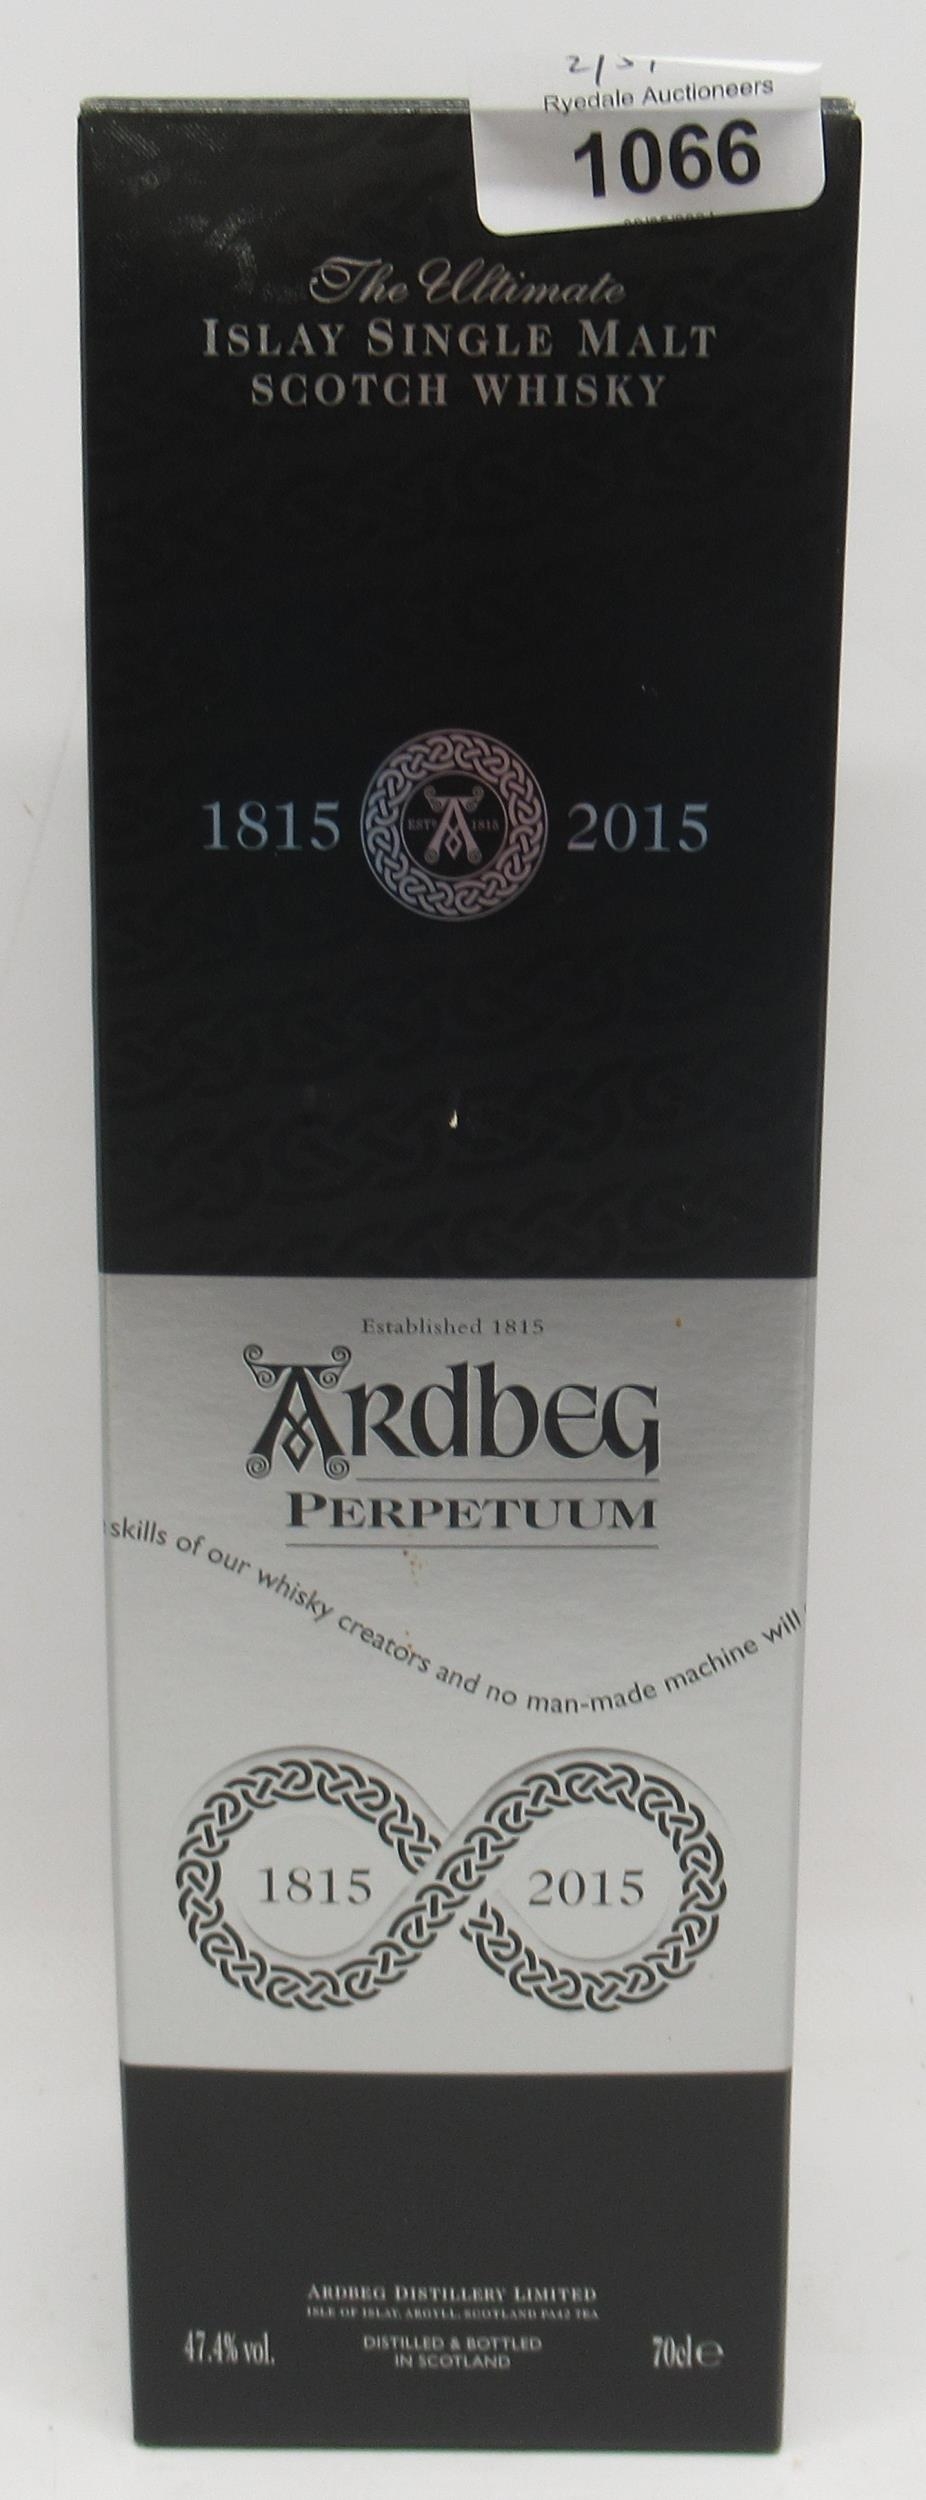 Ardbeg Distillery, Ardbeg Perpetuum 1815 - 2015, Islay single malt whisky, 47.4%, 70cl bottle - Image 2 of 2